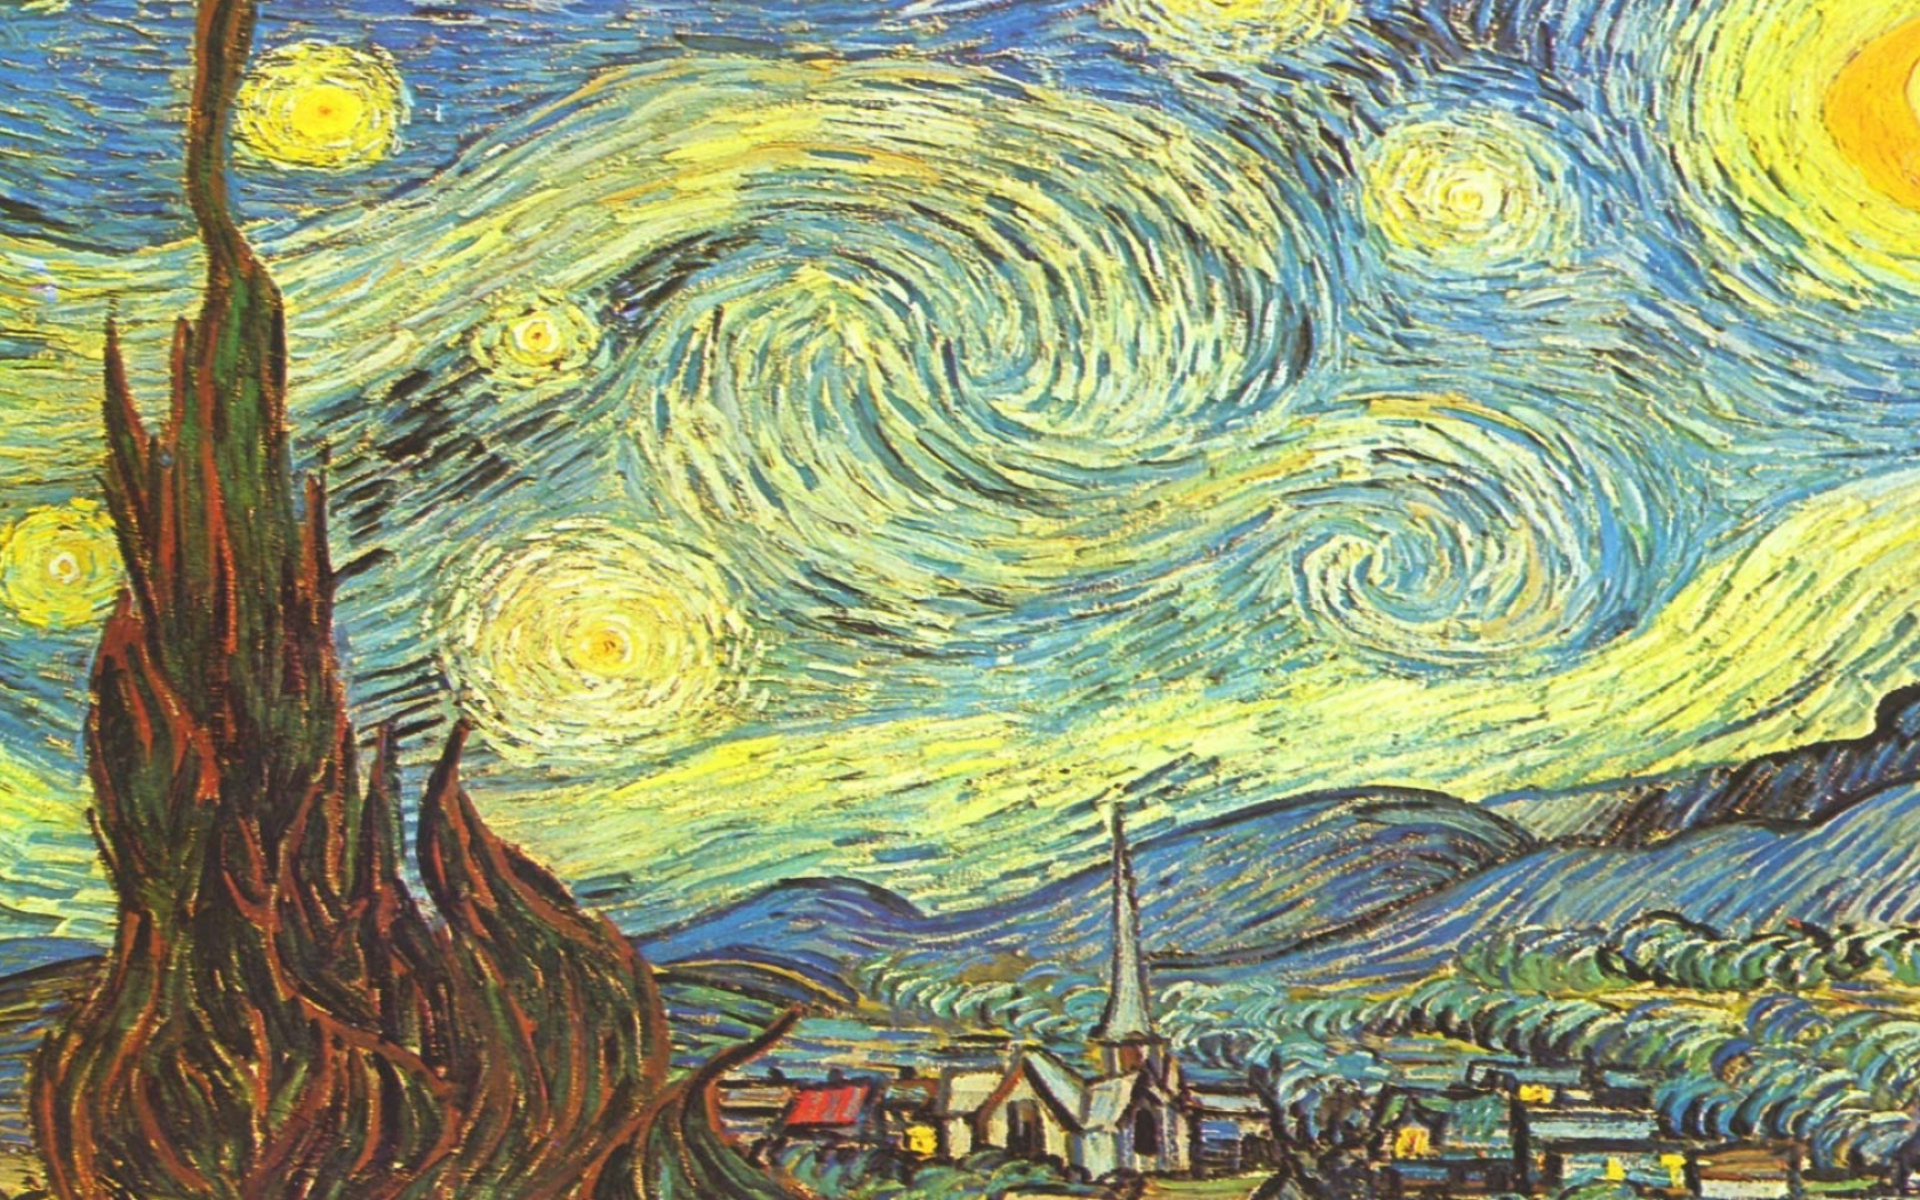 The Starry Night, download Vincent van Gogh wallpaper, high-quality image, home decor, 1920x1200 HD Desktop